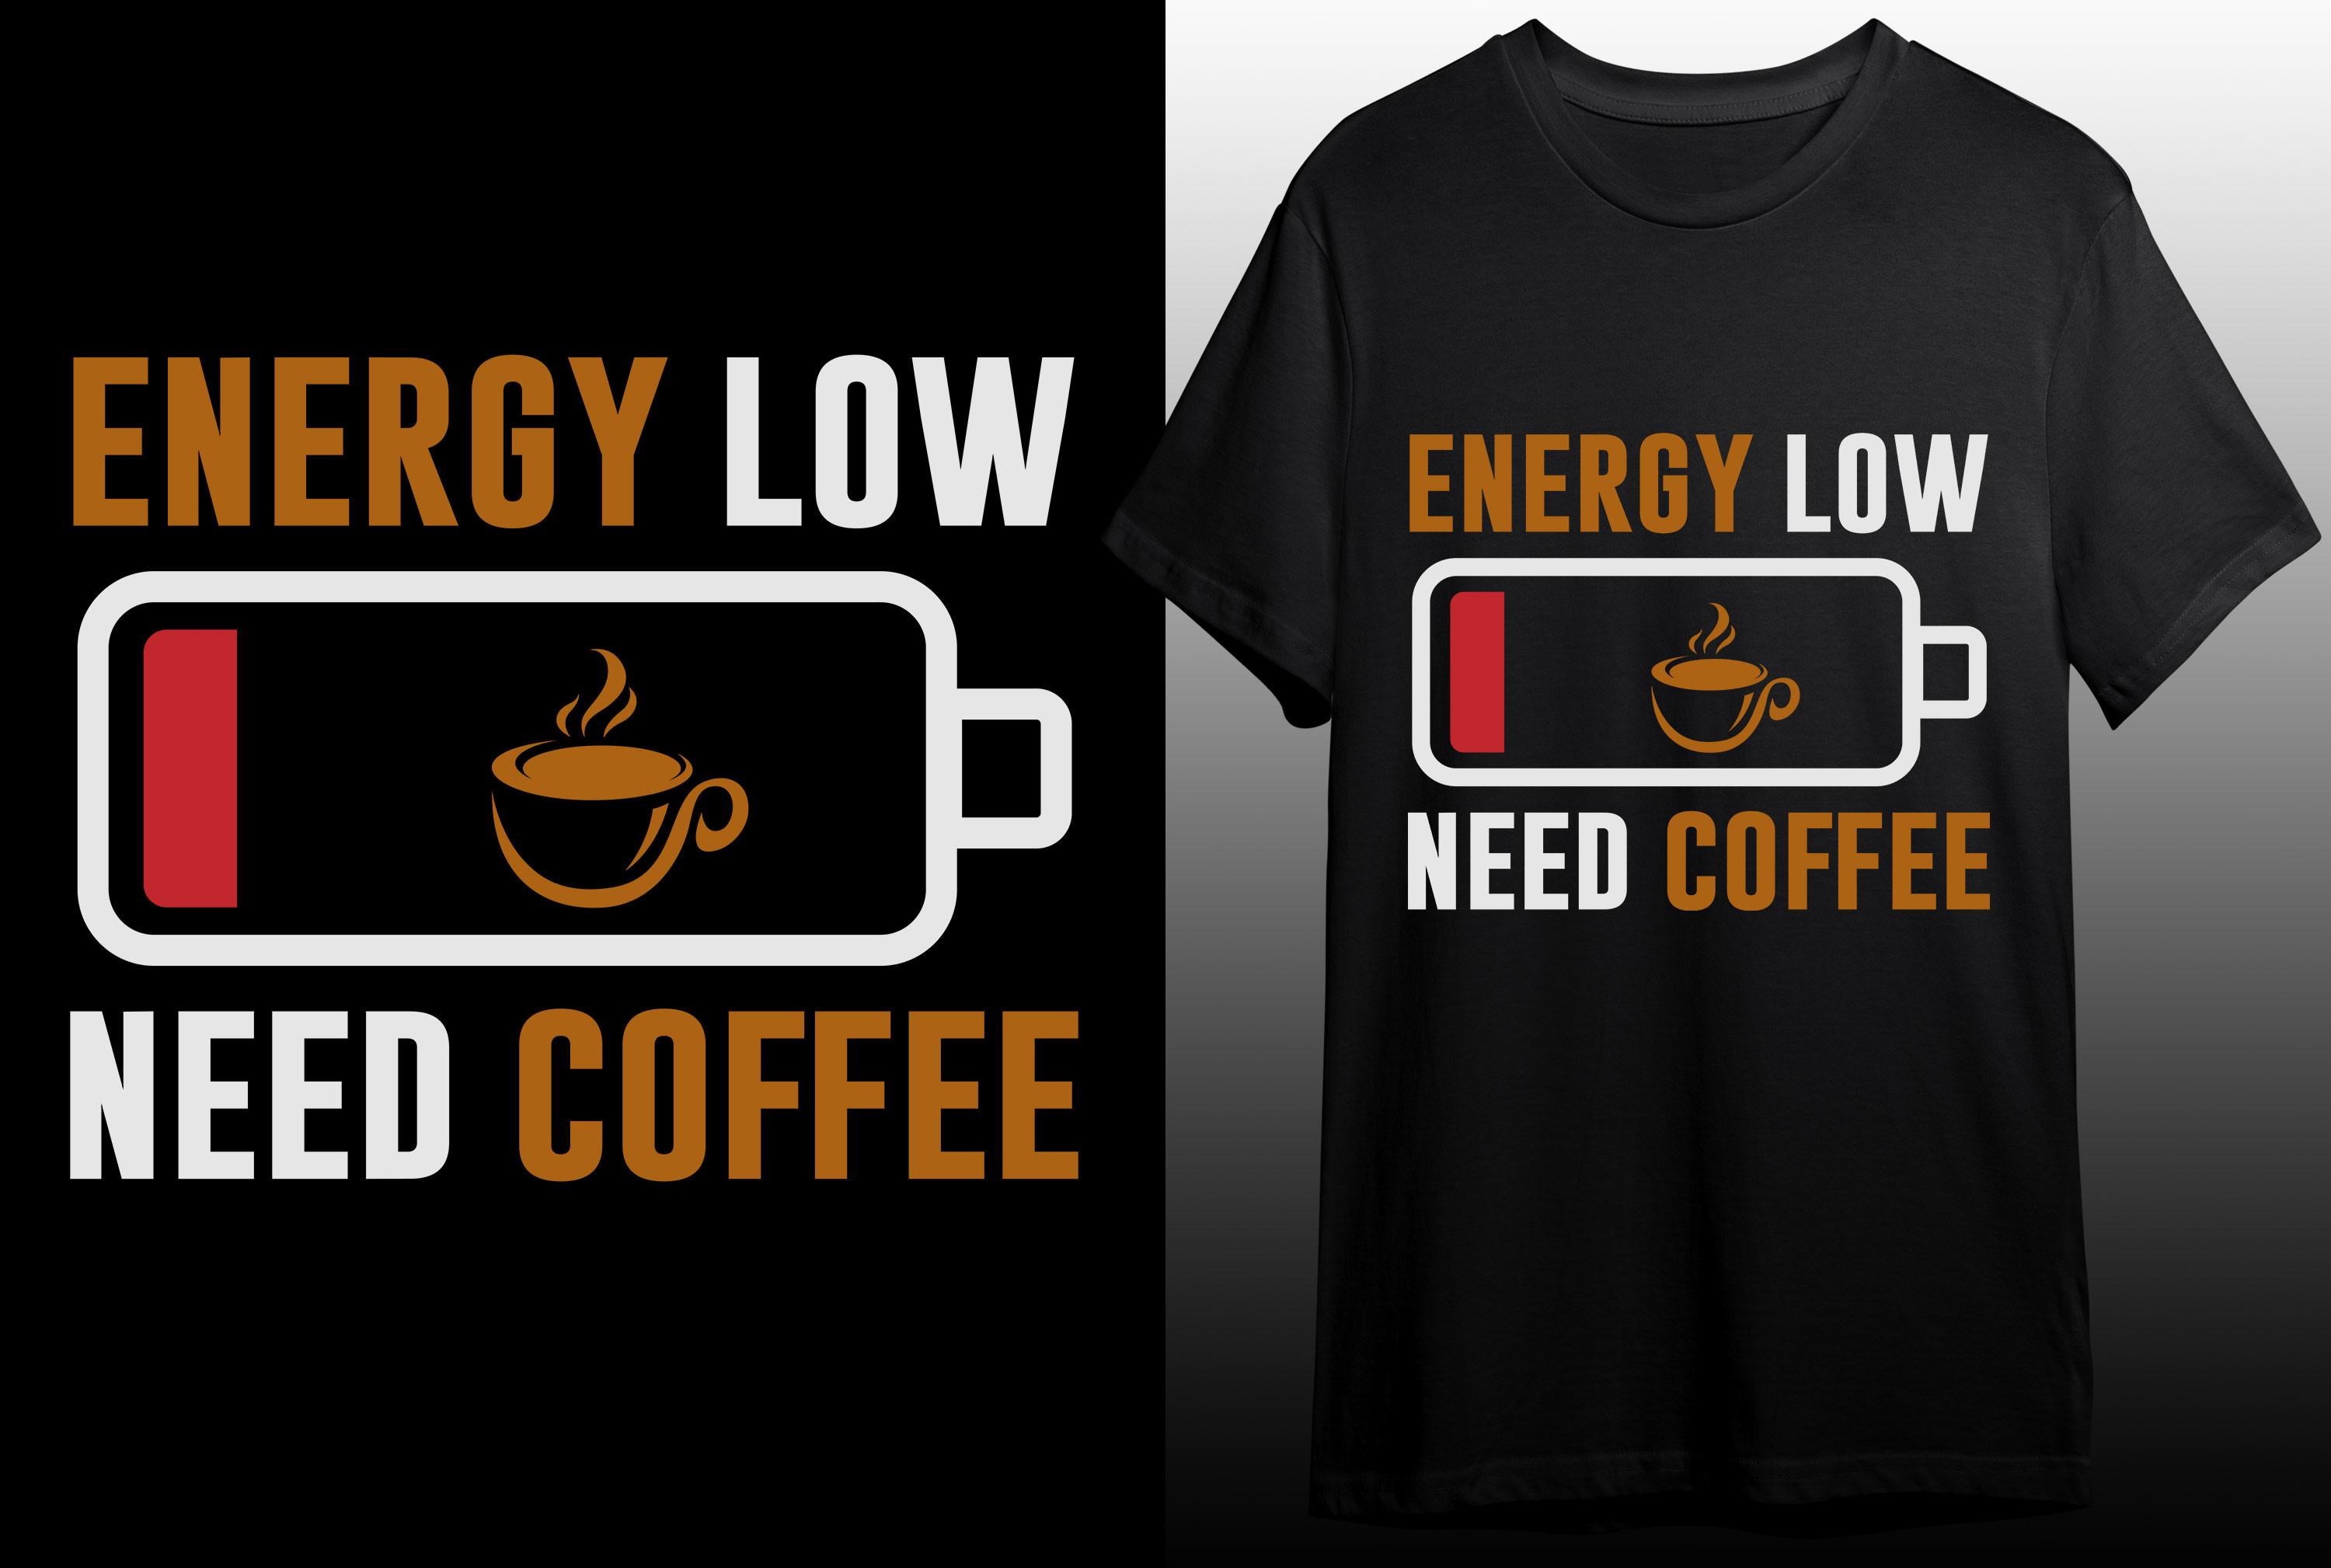 Energy Low Need Coffee T-shirt Design